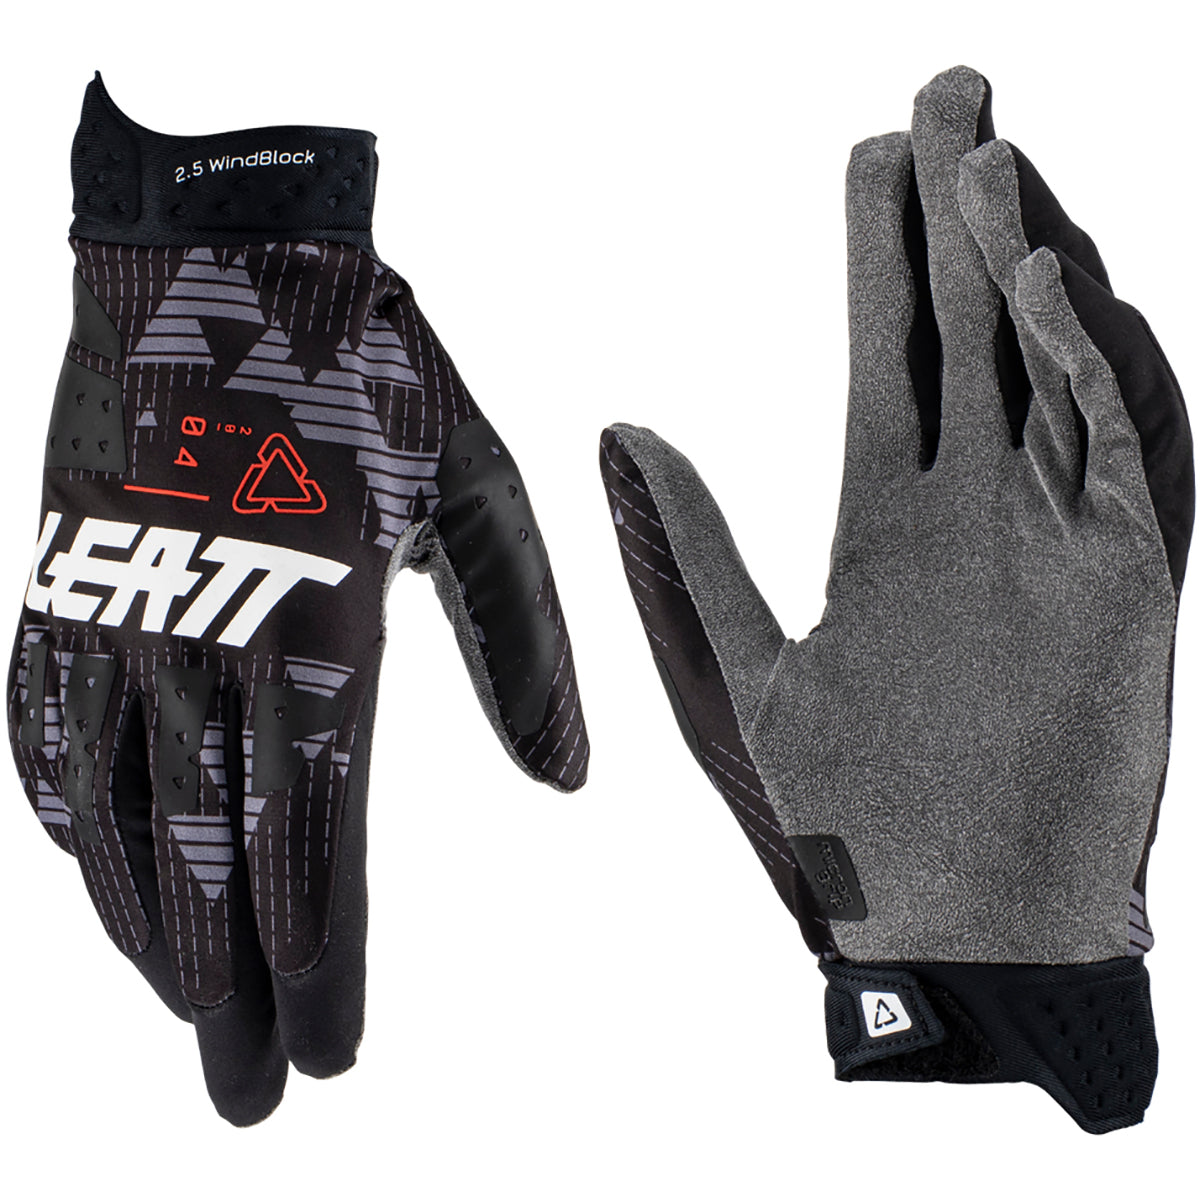 Leatt Windblock 2.5 Adult Off-Road Gloves-6023040850